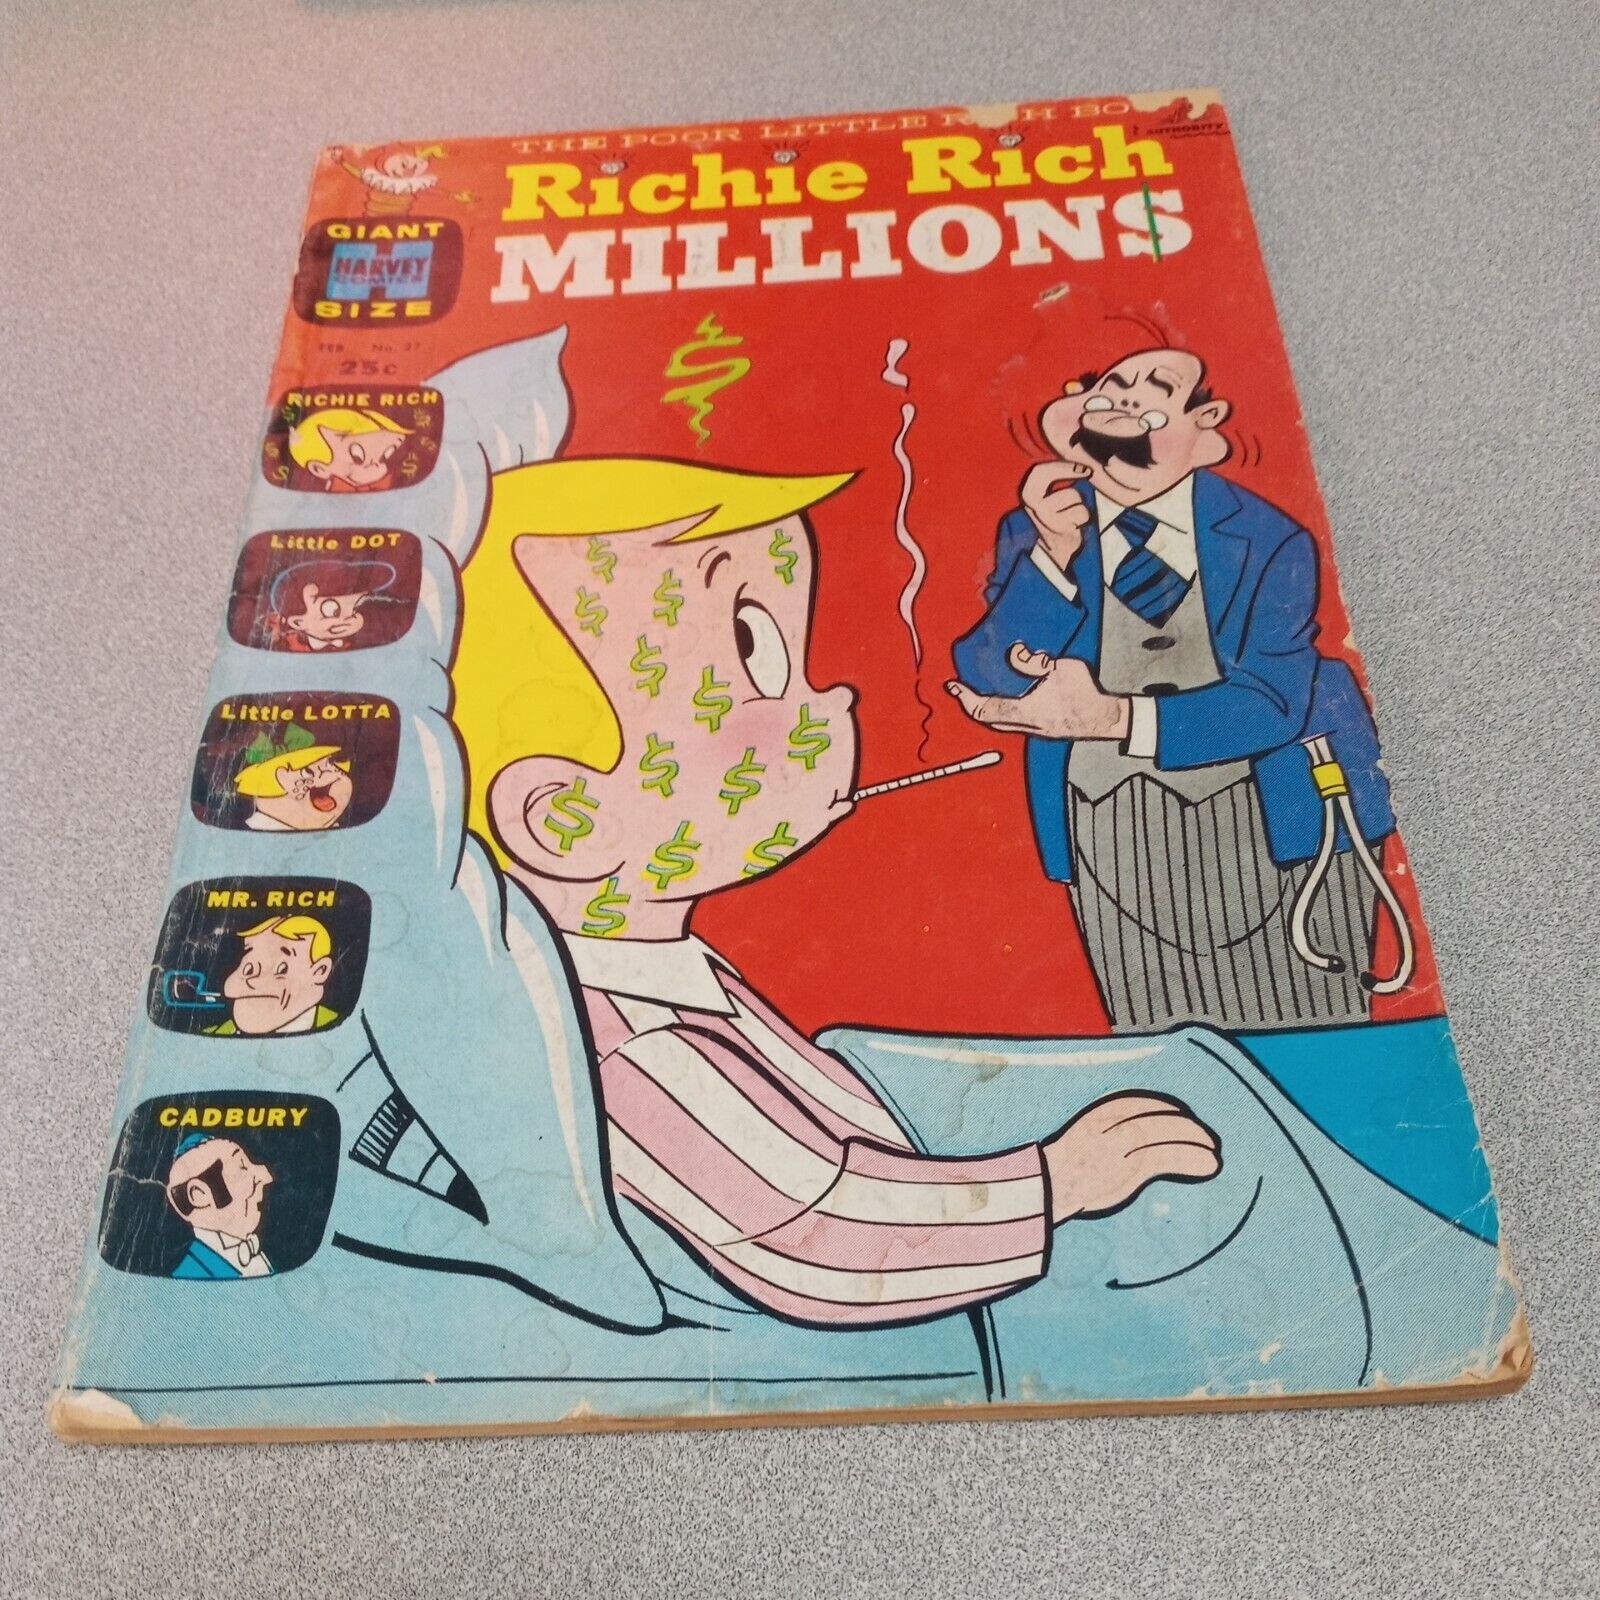 Richie Rich Millions #27 - Harvey Comic 1967 Silver Age Giant Hits